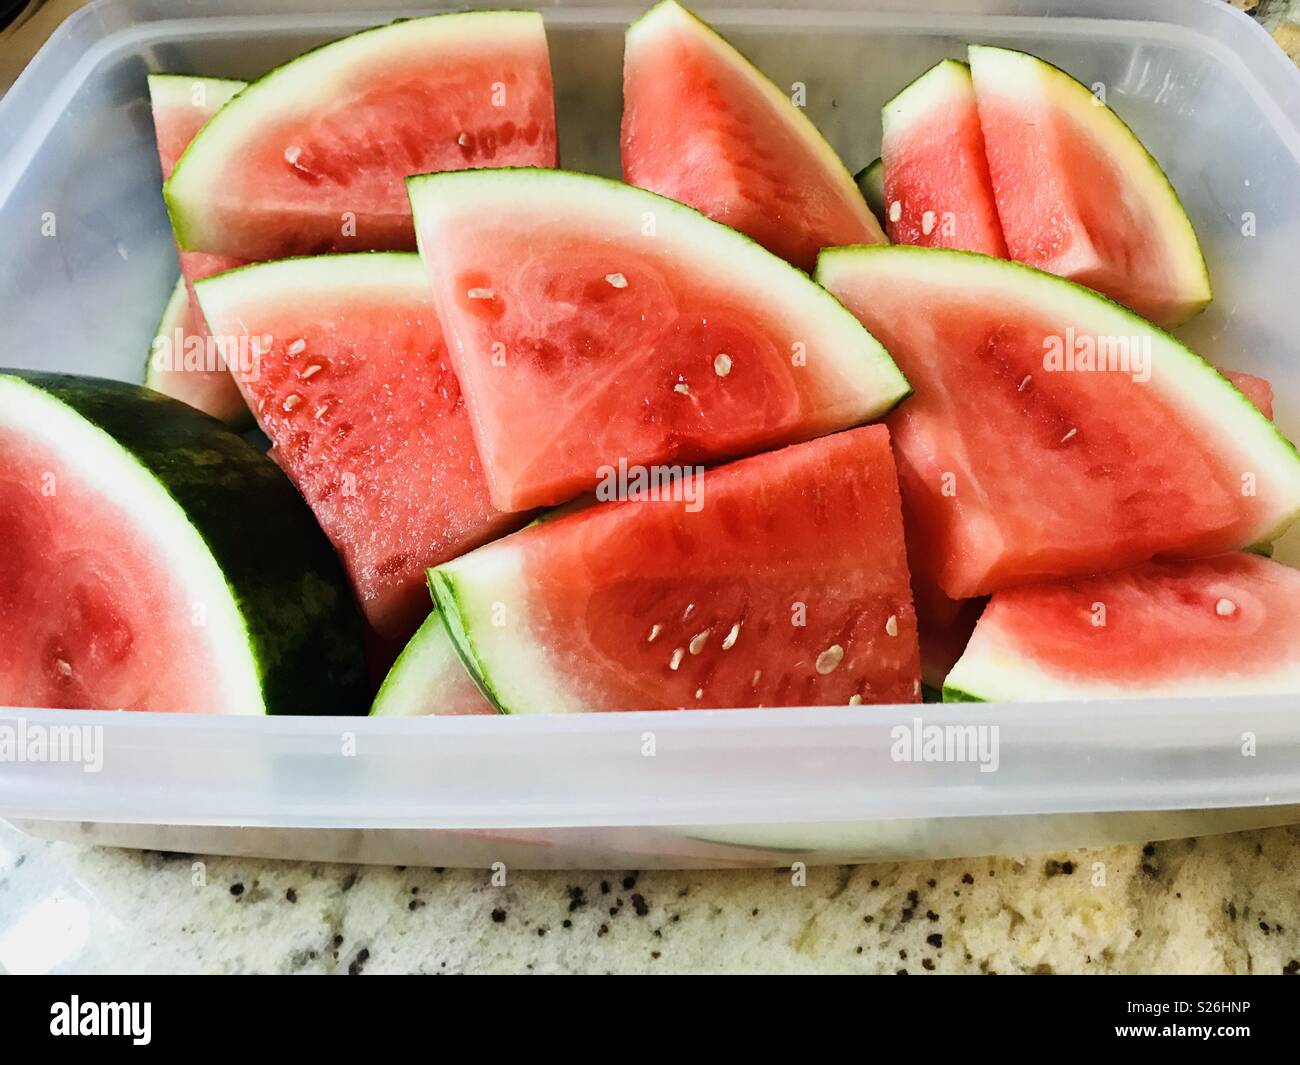 Cut up watermelon Stock Photo